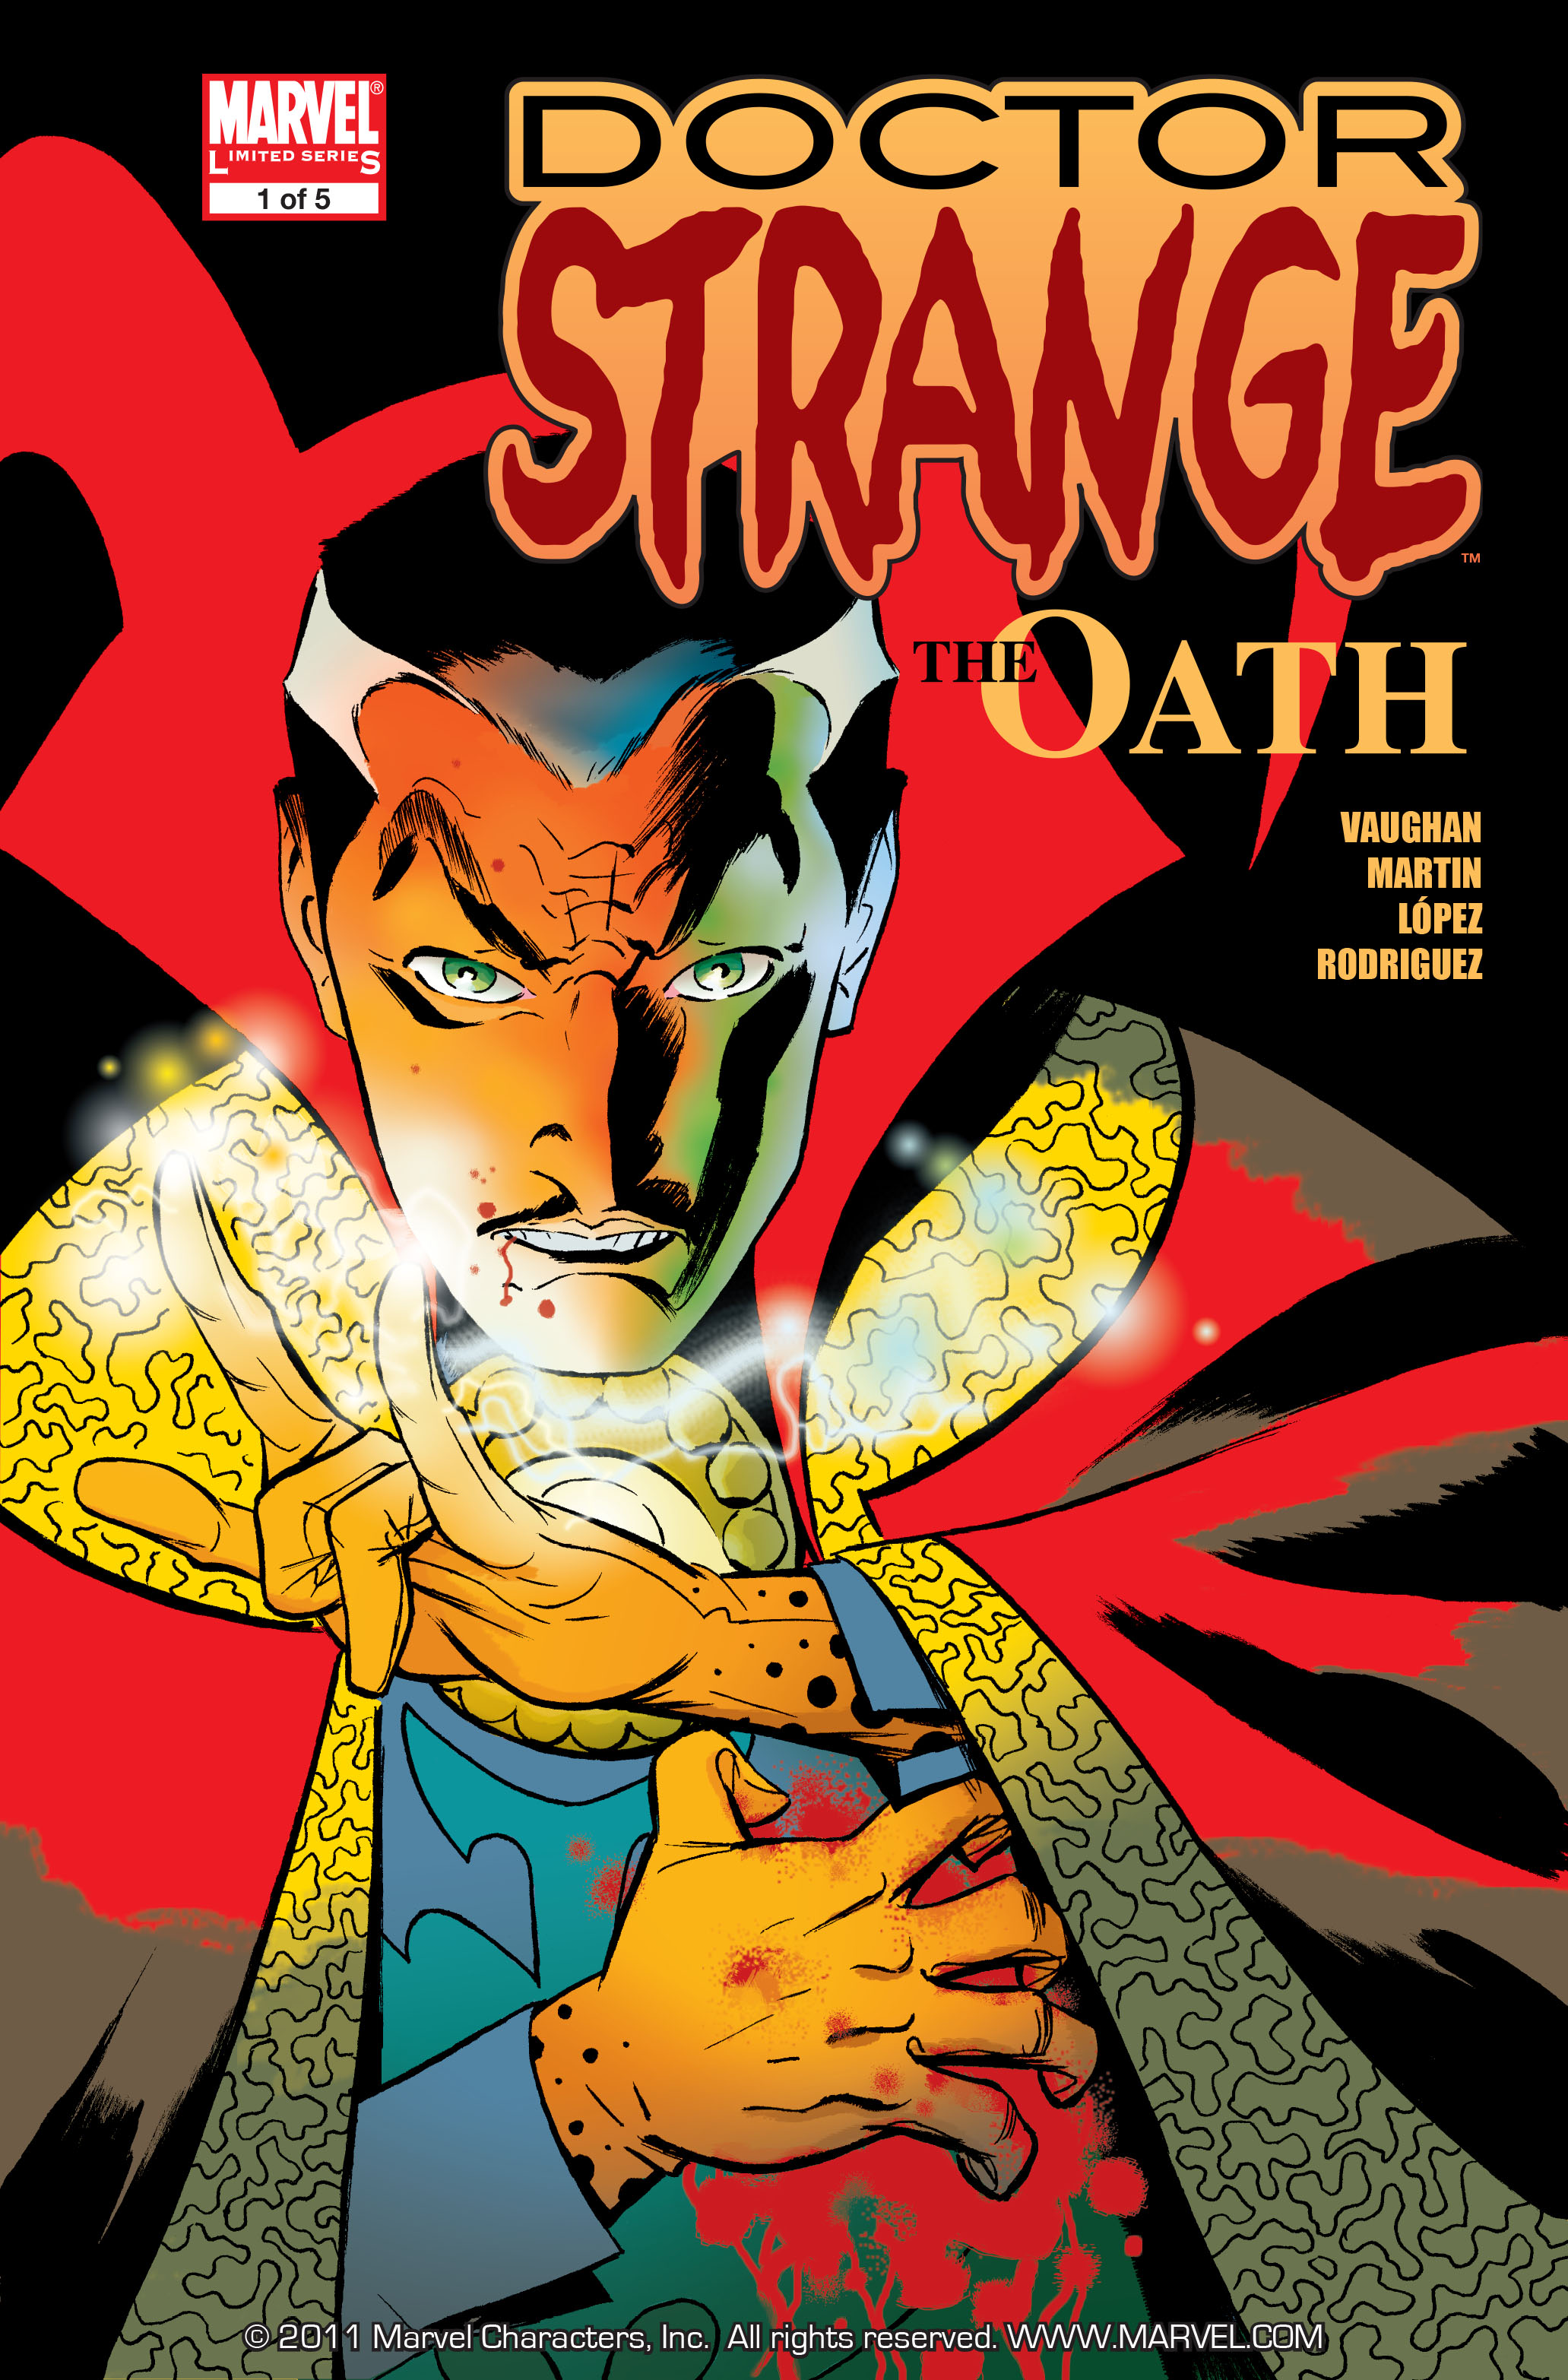 Read online Doctor Strange: The Oath comic -  Issue #1 - 1